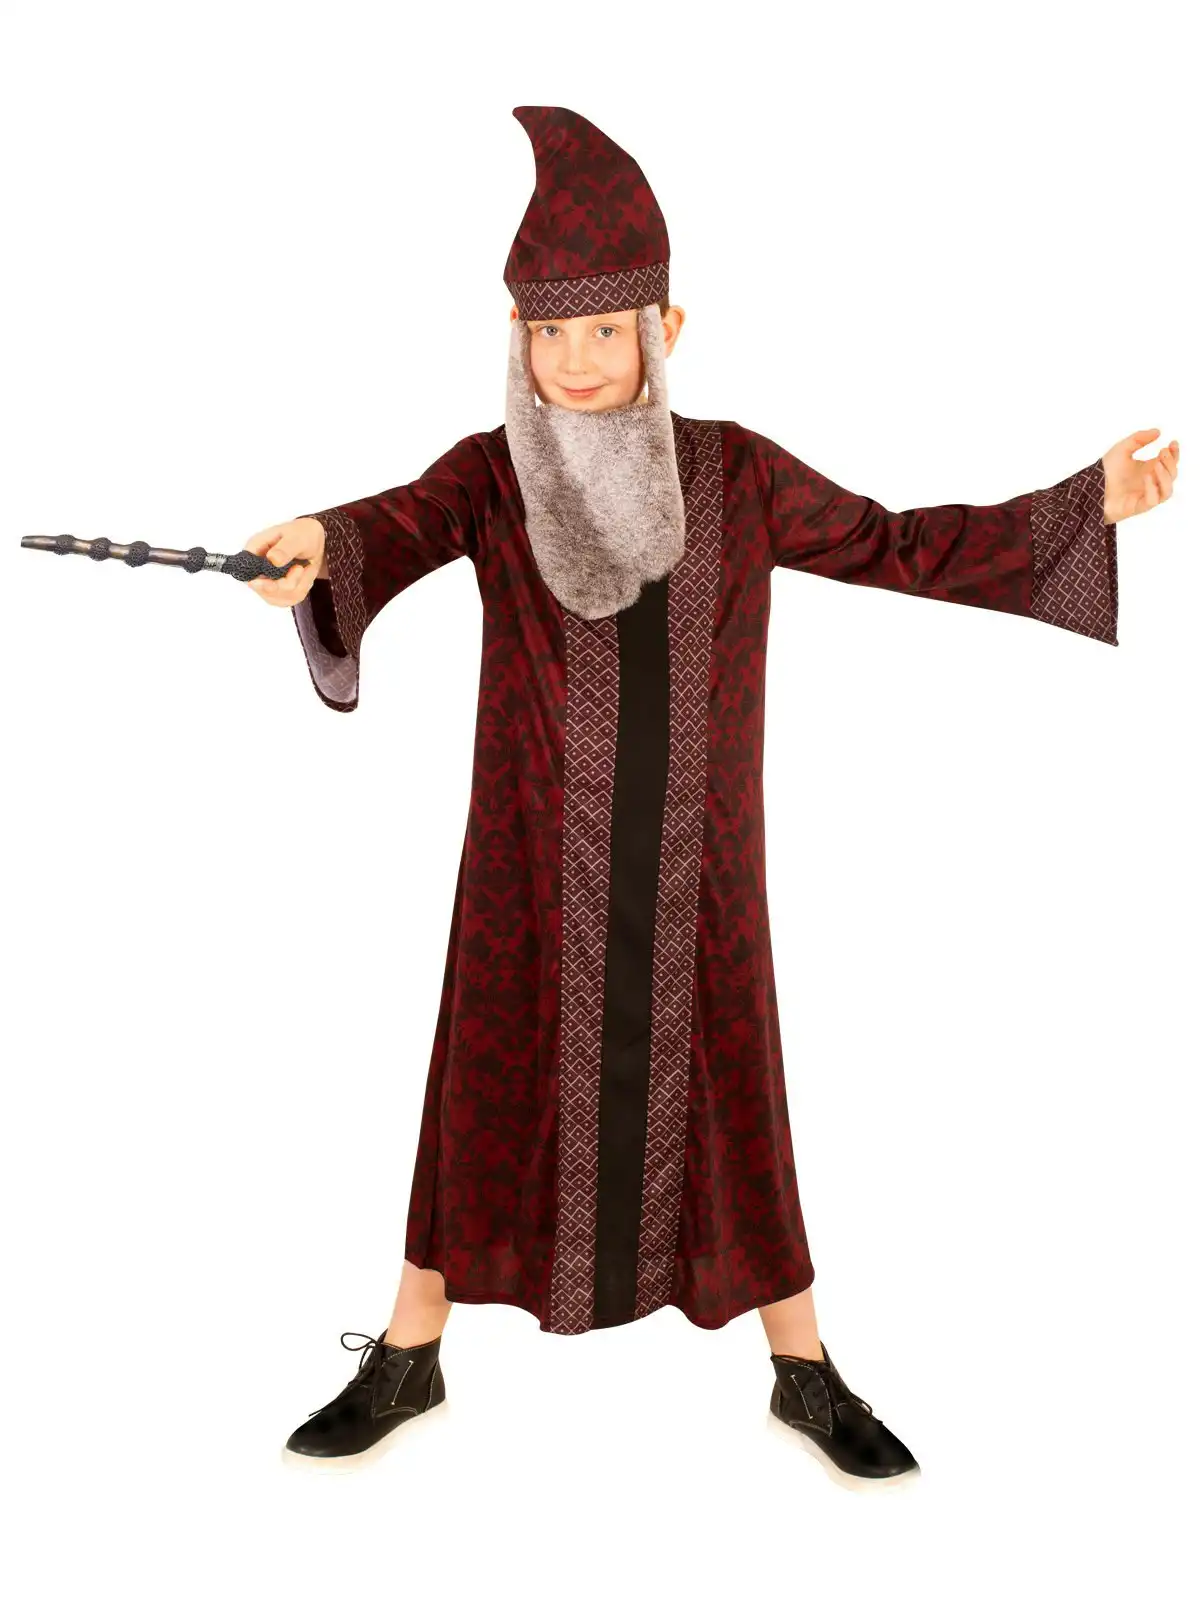 Harry Potter Dumbledore Hogwarts Childrens Wizard Robe Costume Set Size 9yrs+